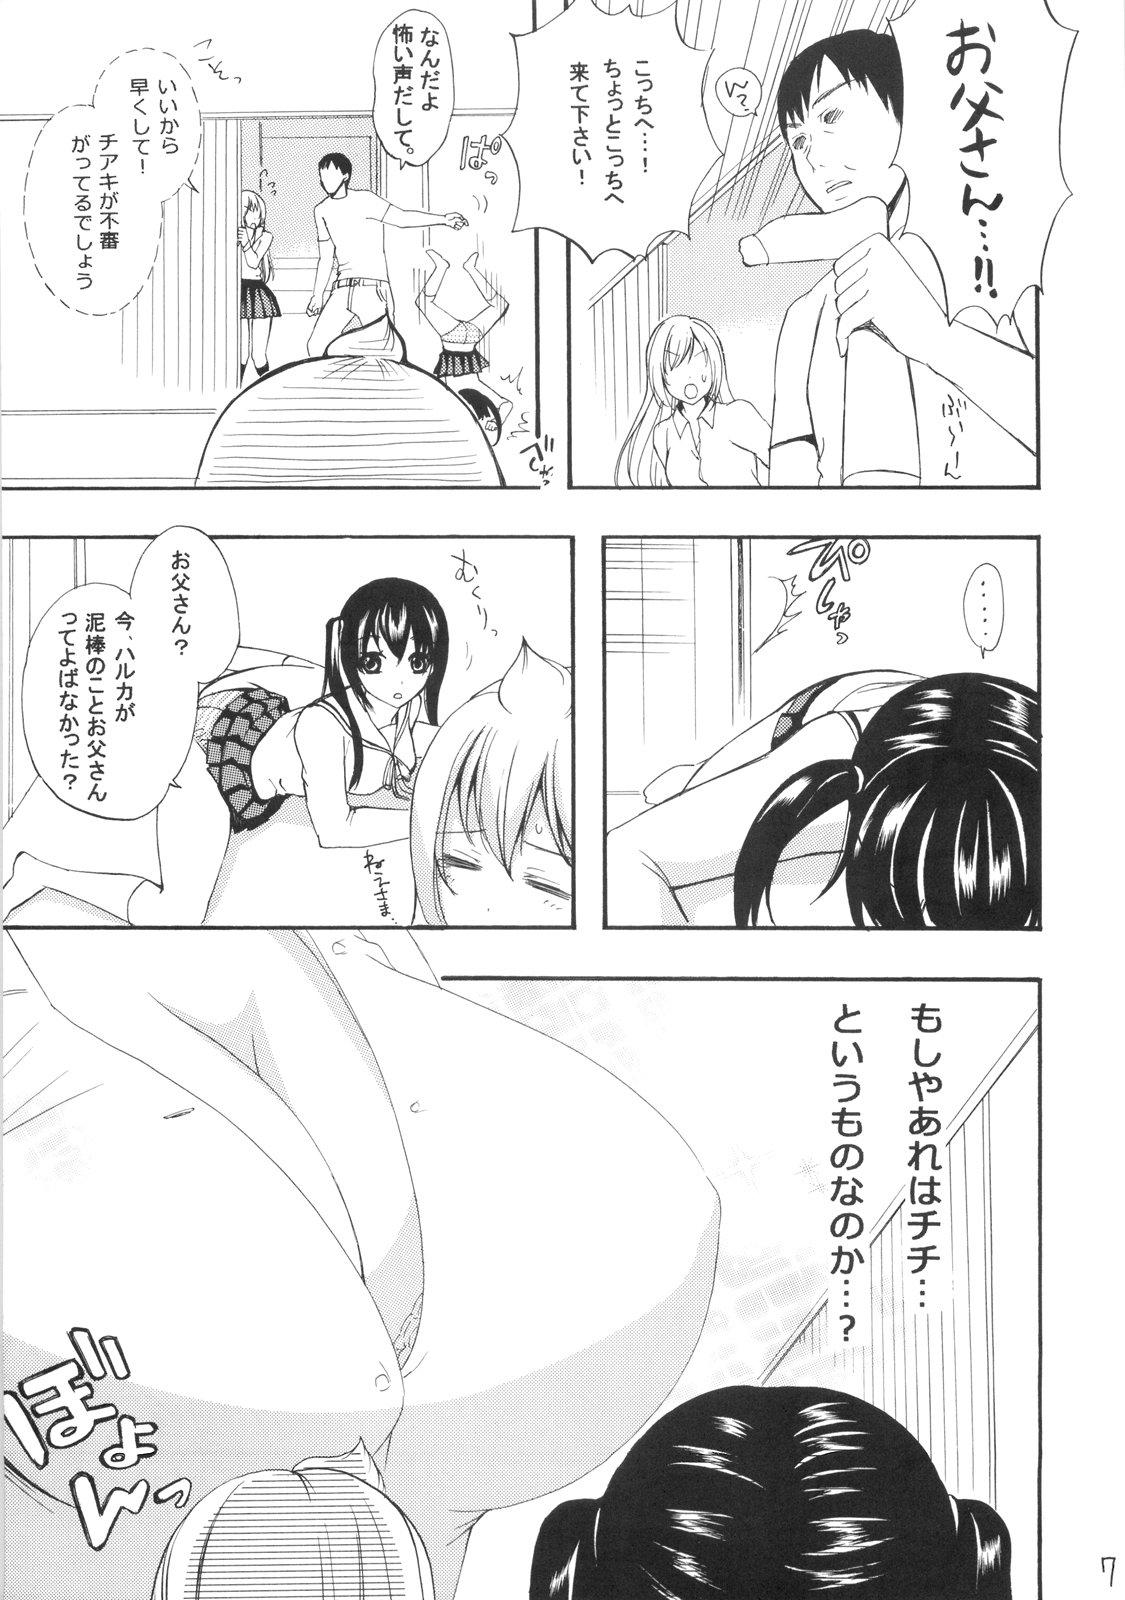 Chacal Haru-Kan in the Kitchen - Minami ke Seduction - Page 6